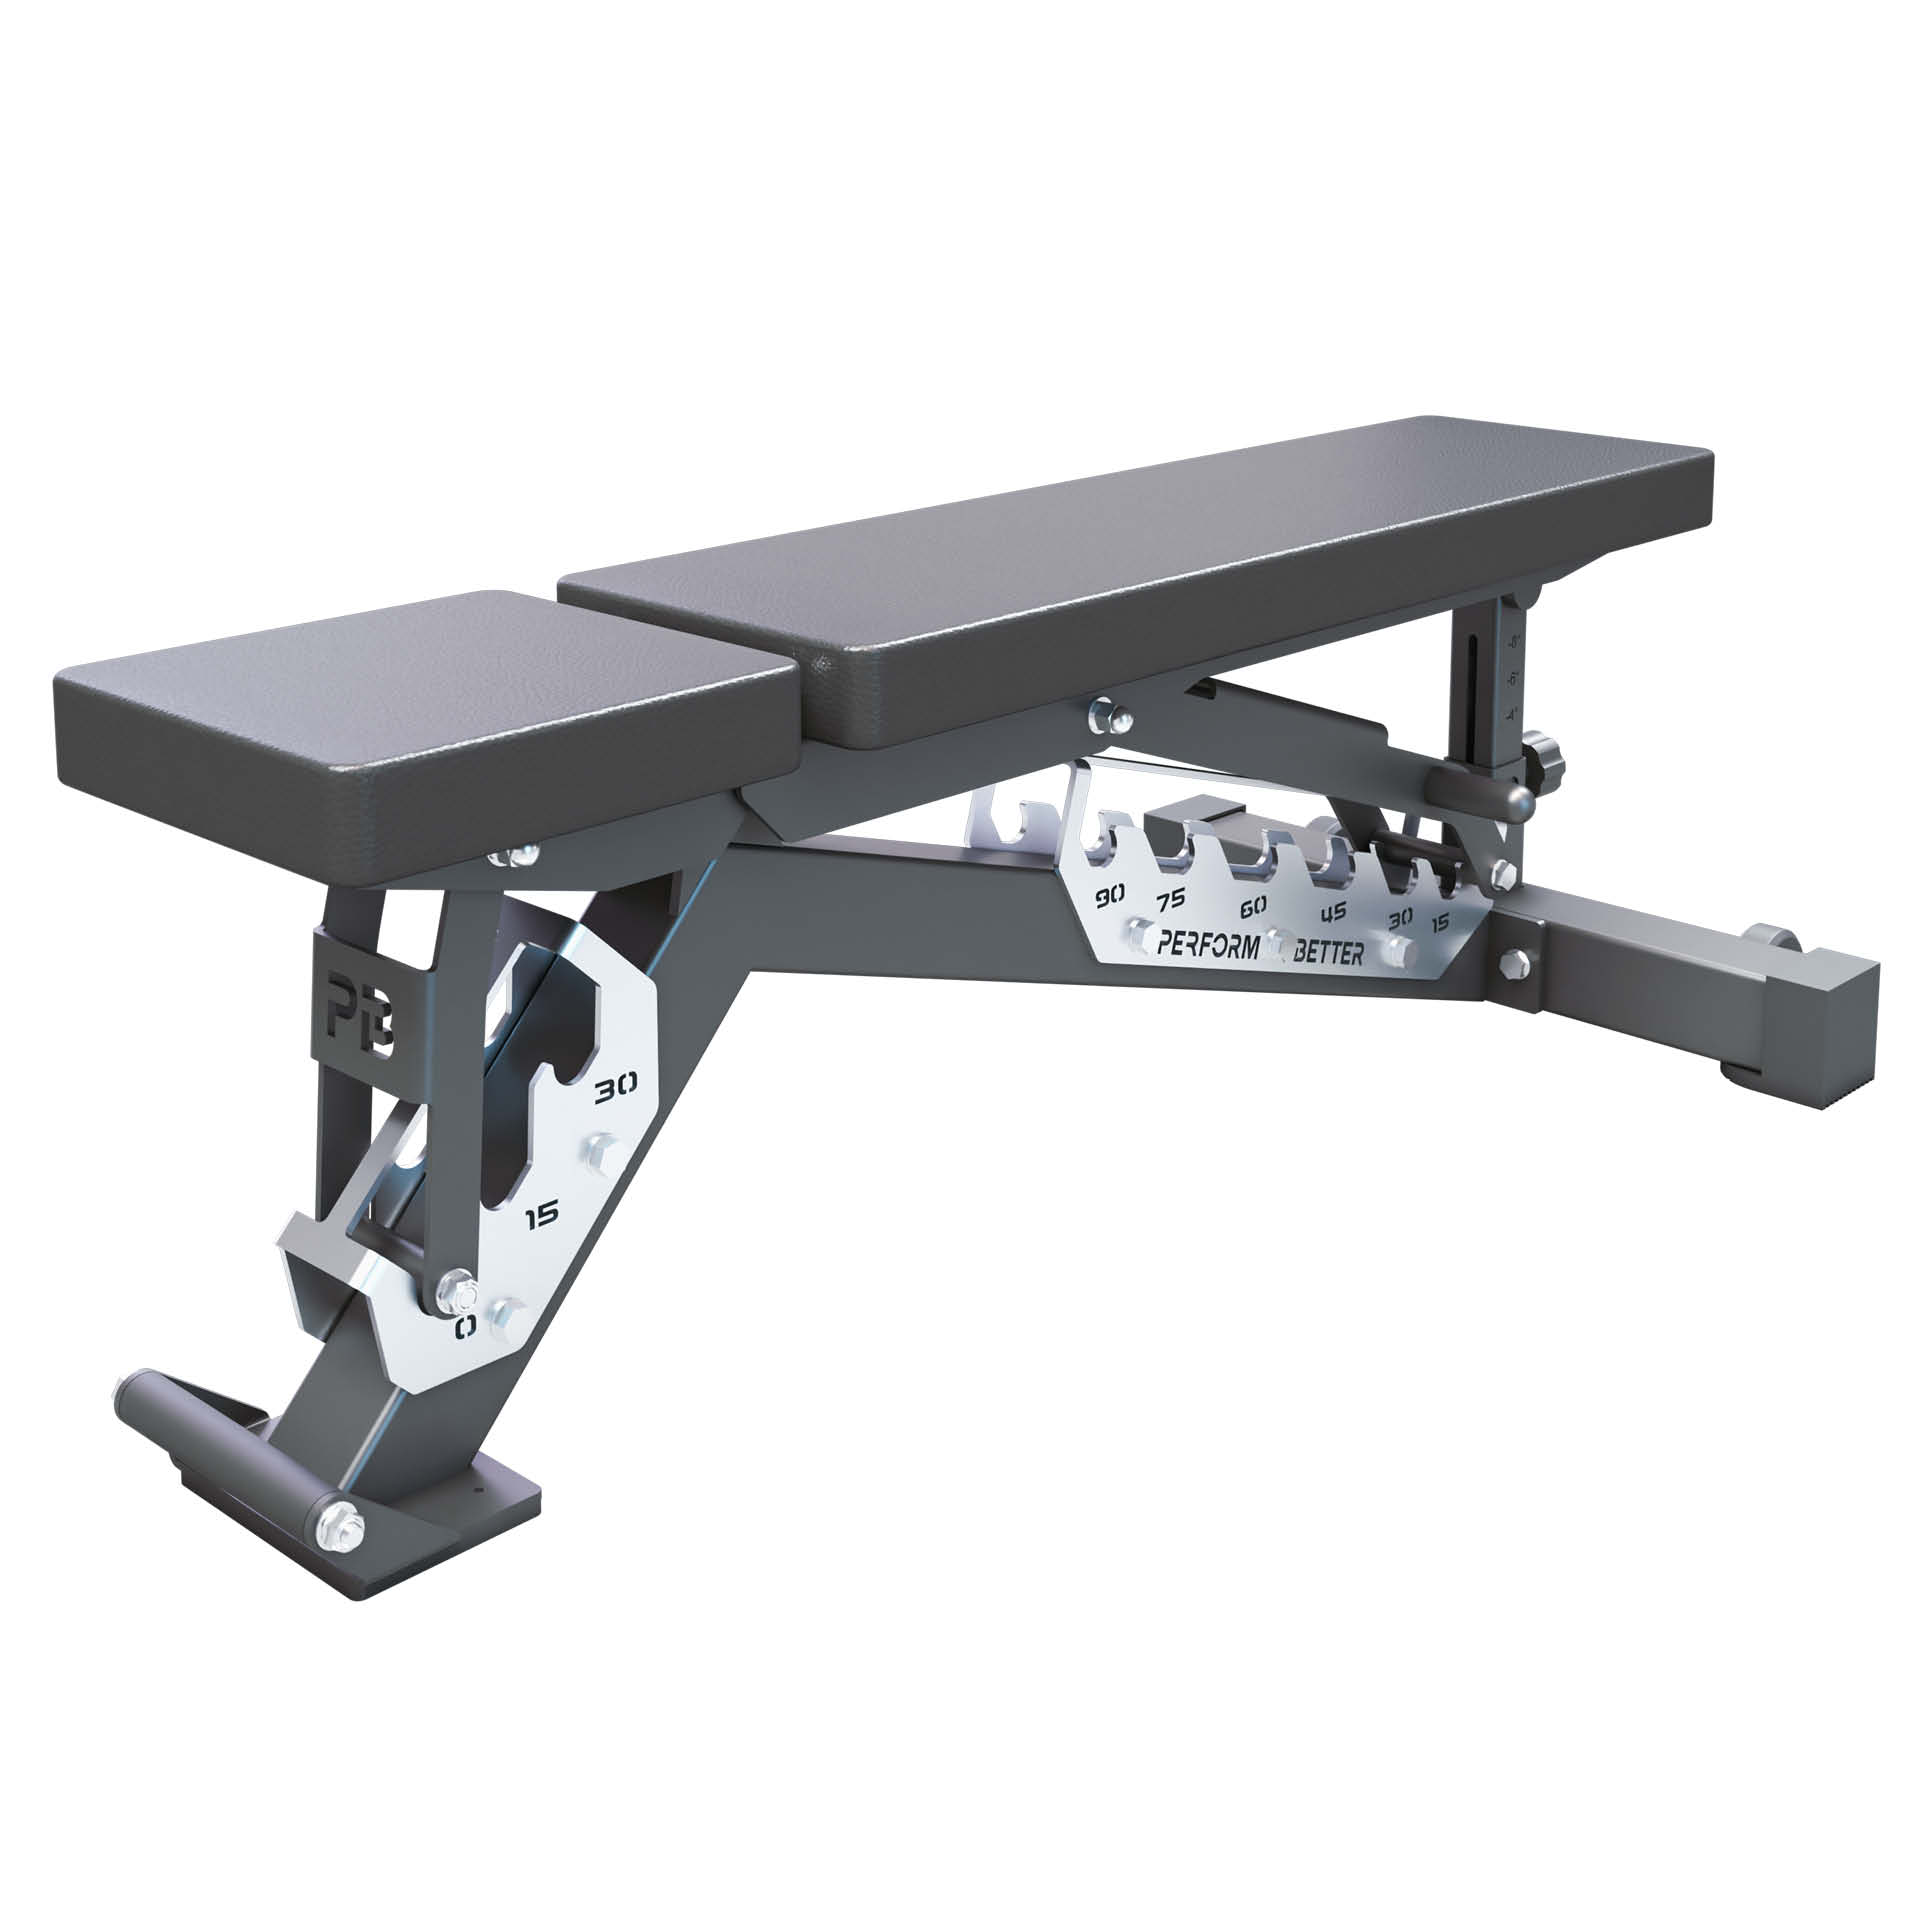 Perform Better adjustable weight bench incline/decline